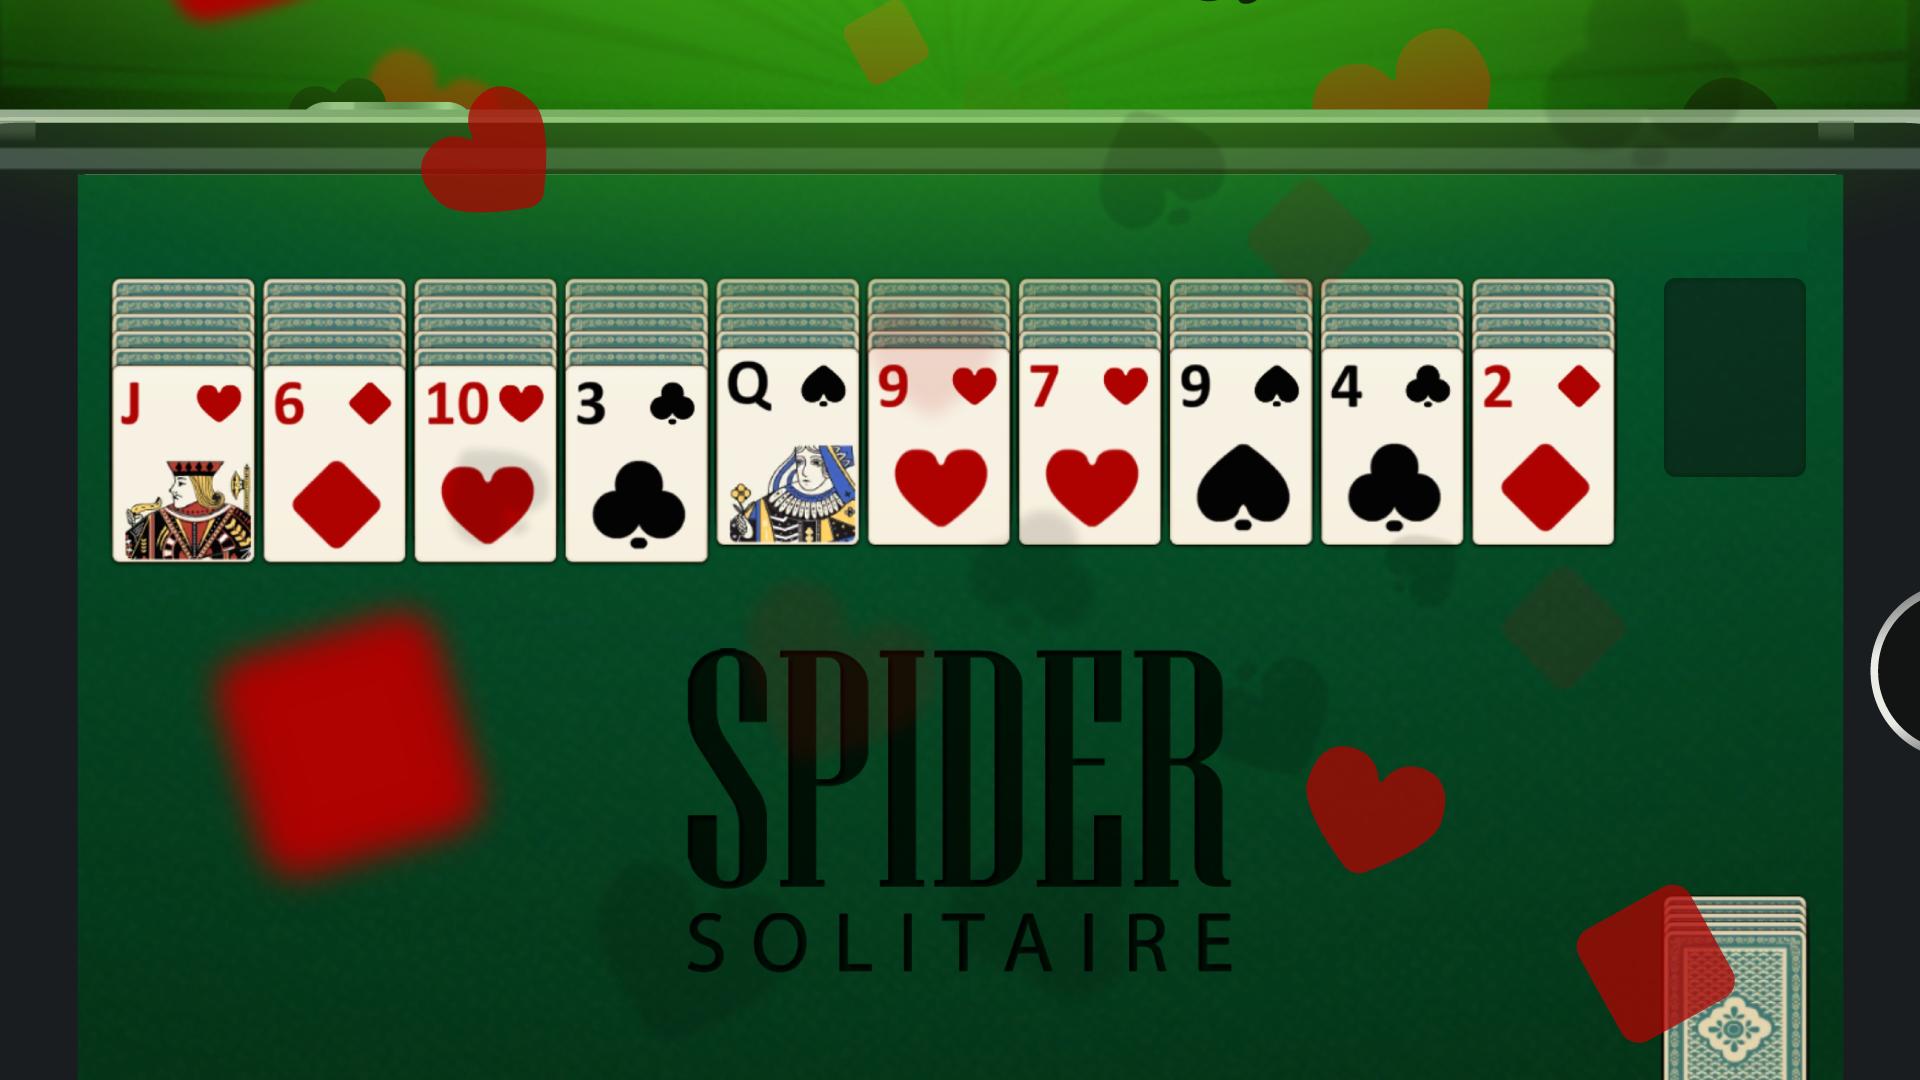 Spider Solitaire four Suits. Пасьянс паук заставка фон без карт. Карты паук. Паук миллениум на весь экран пасьянс